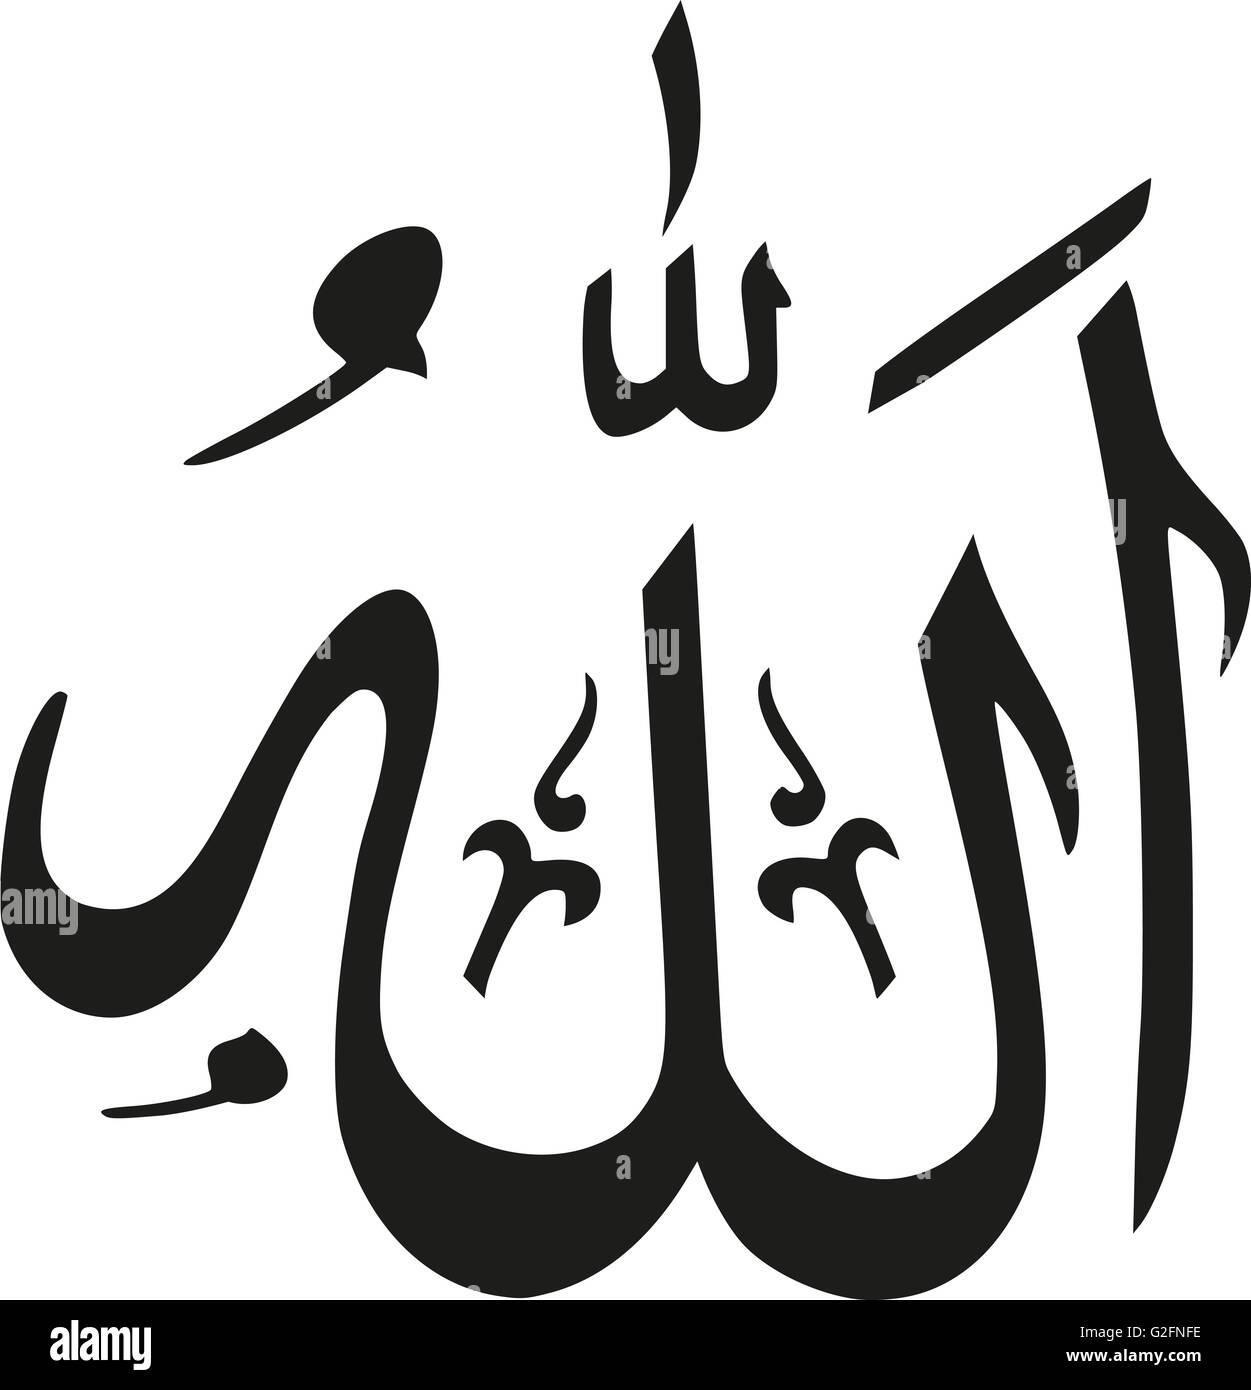 Allah arabic -Fotos und -Bildmaterial in hoher Auflösung – Alamy